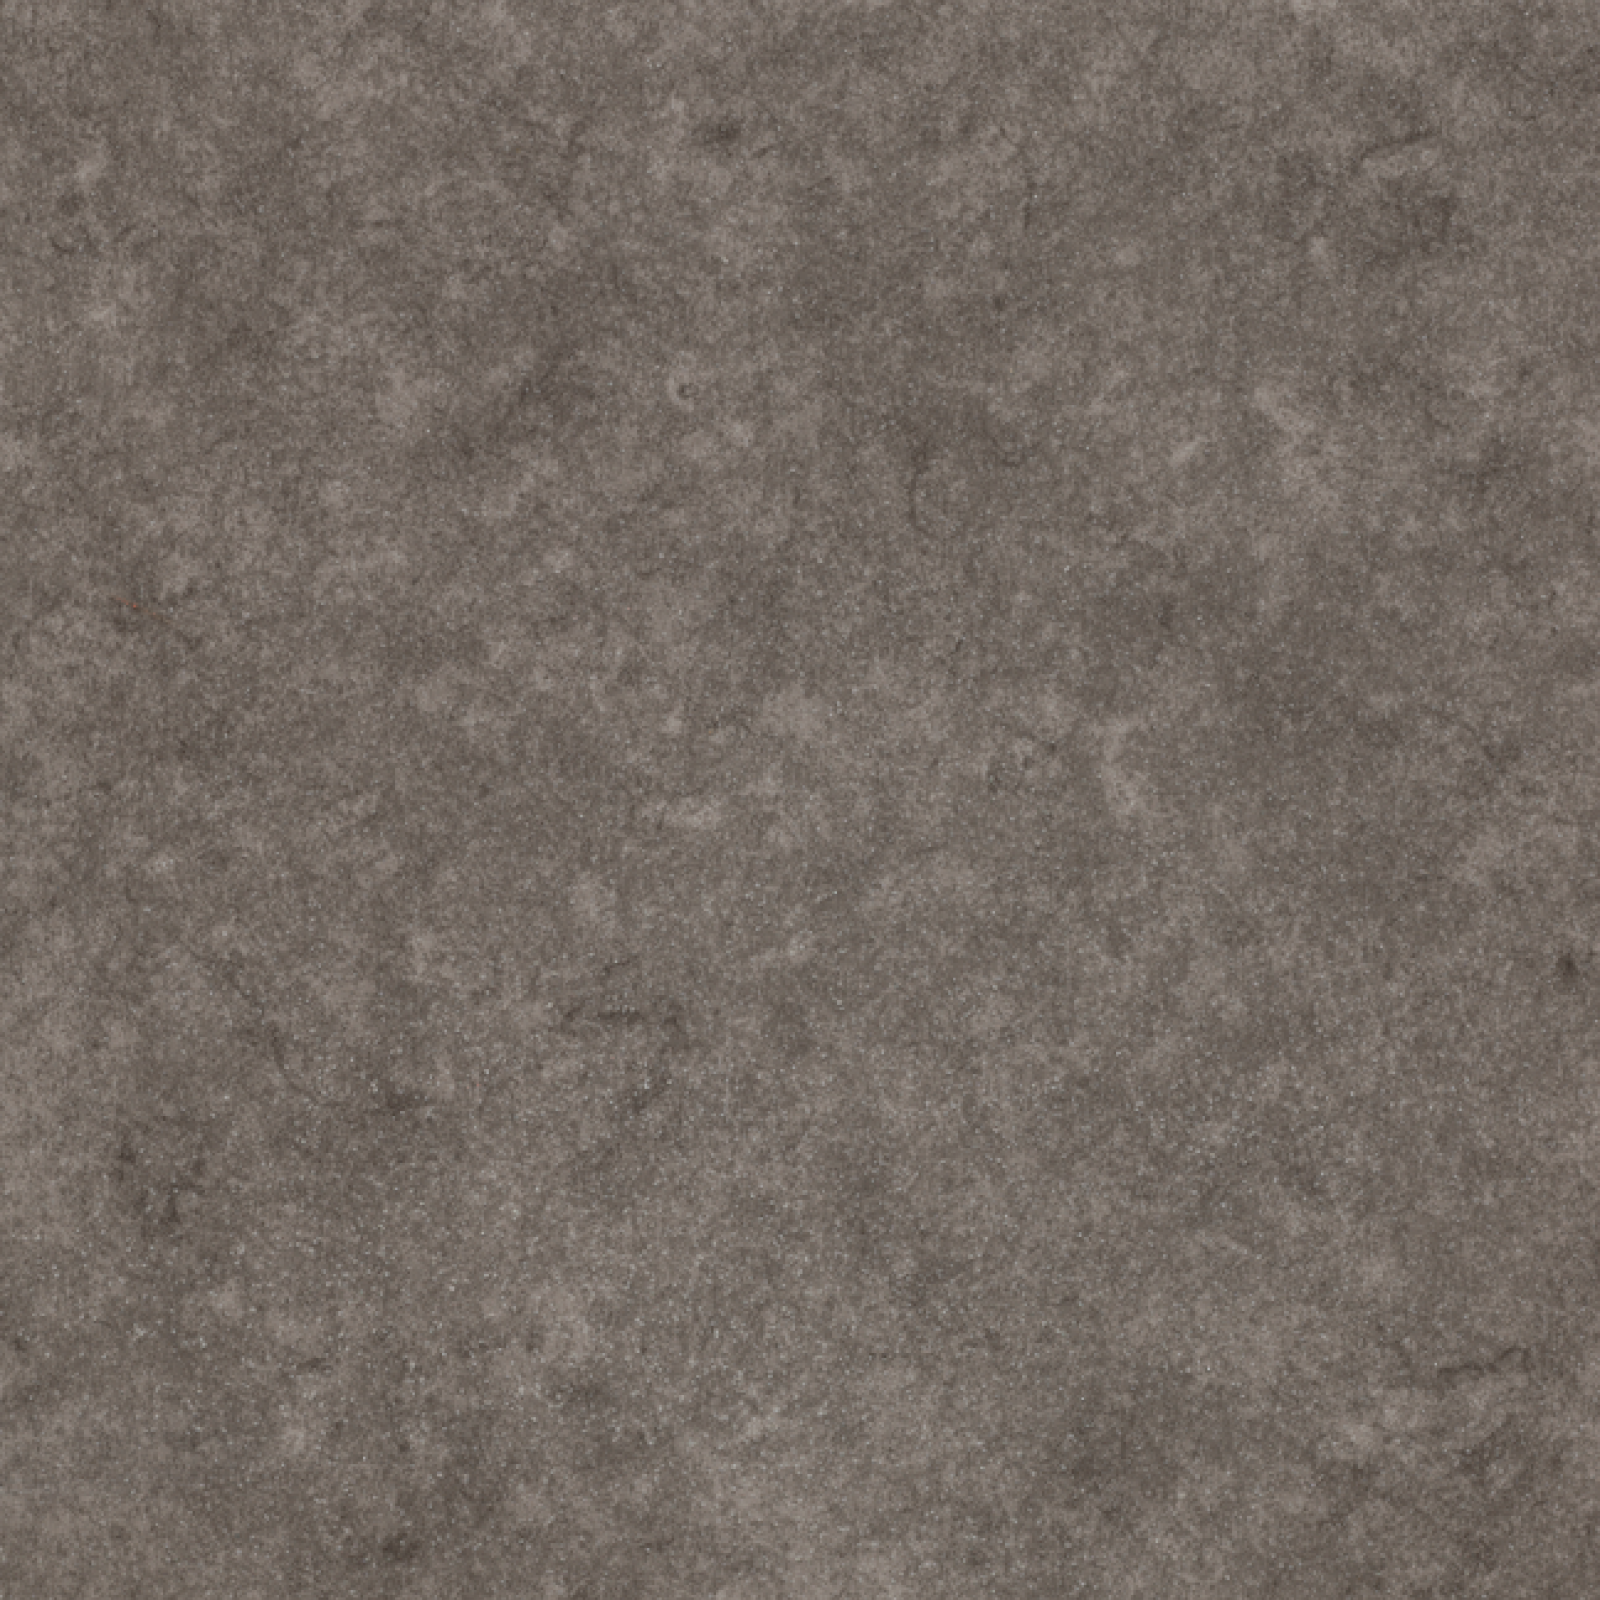 Vzor - 617162 grey concrete